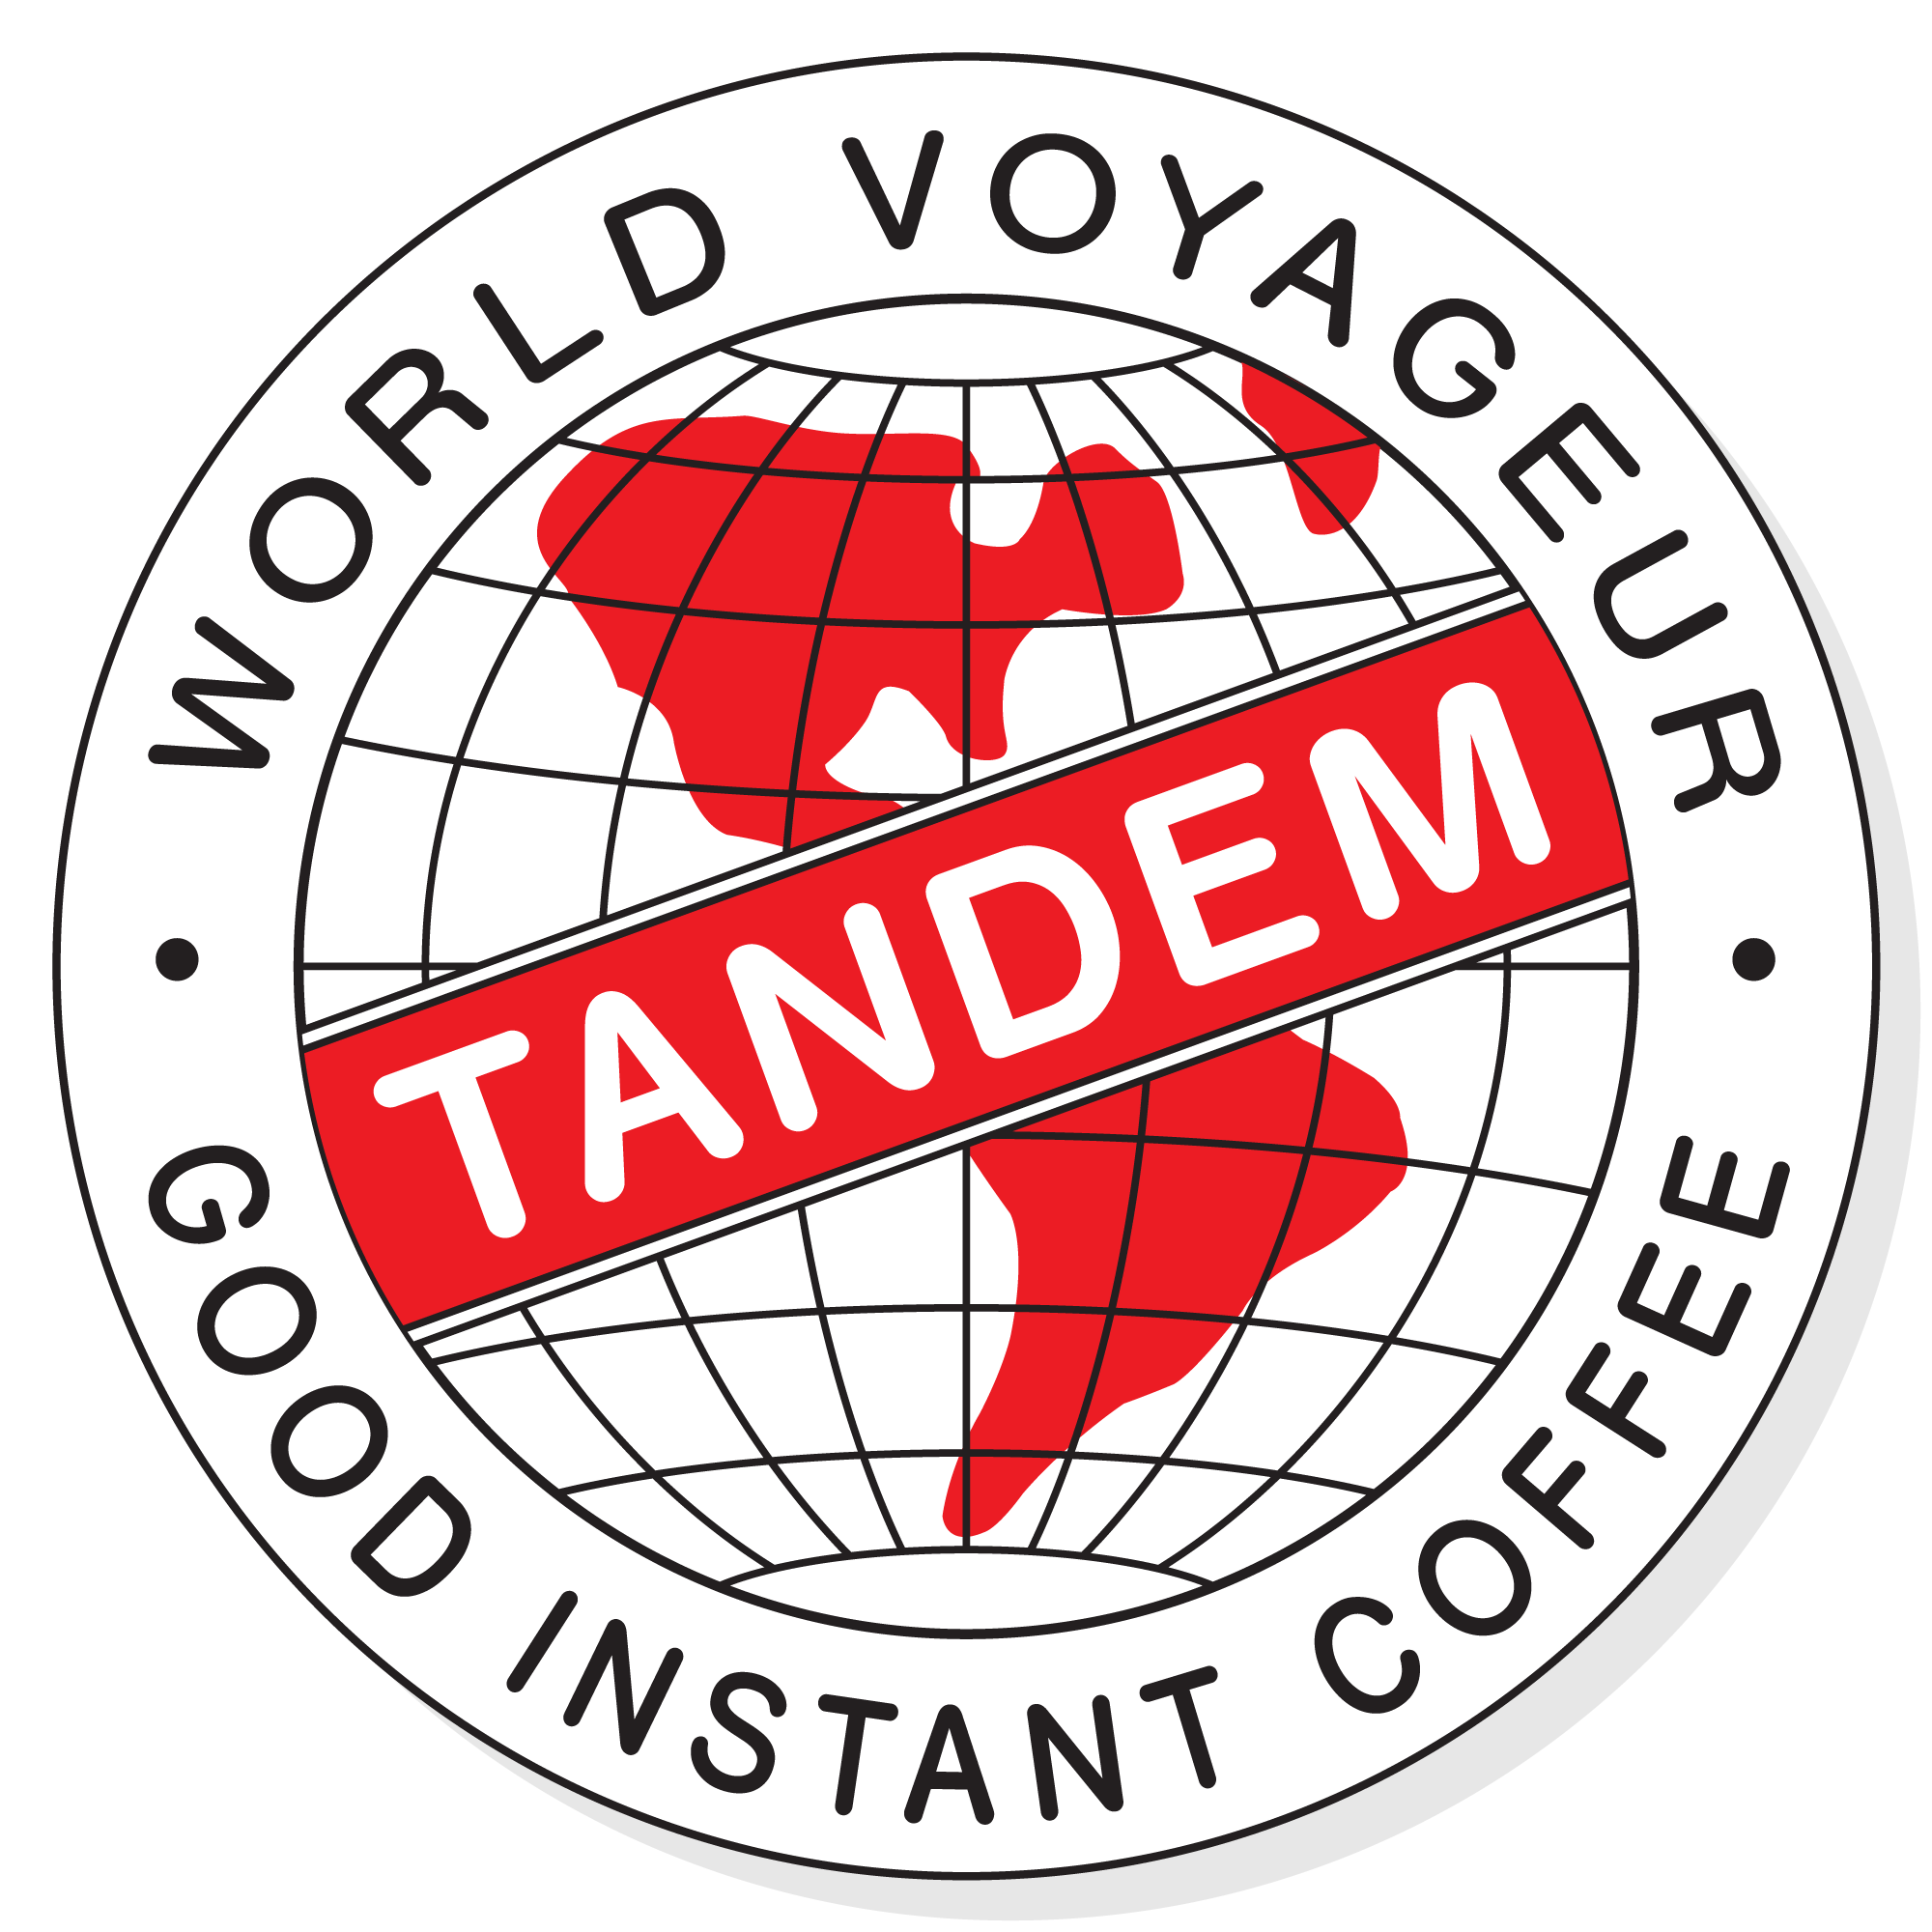 Tandem World Voyageur